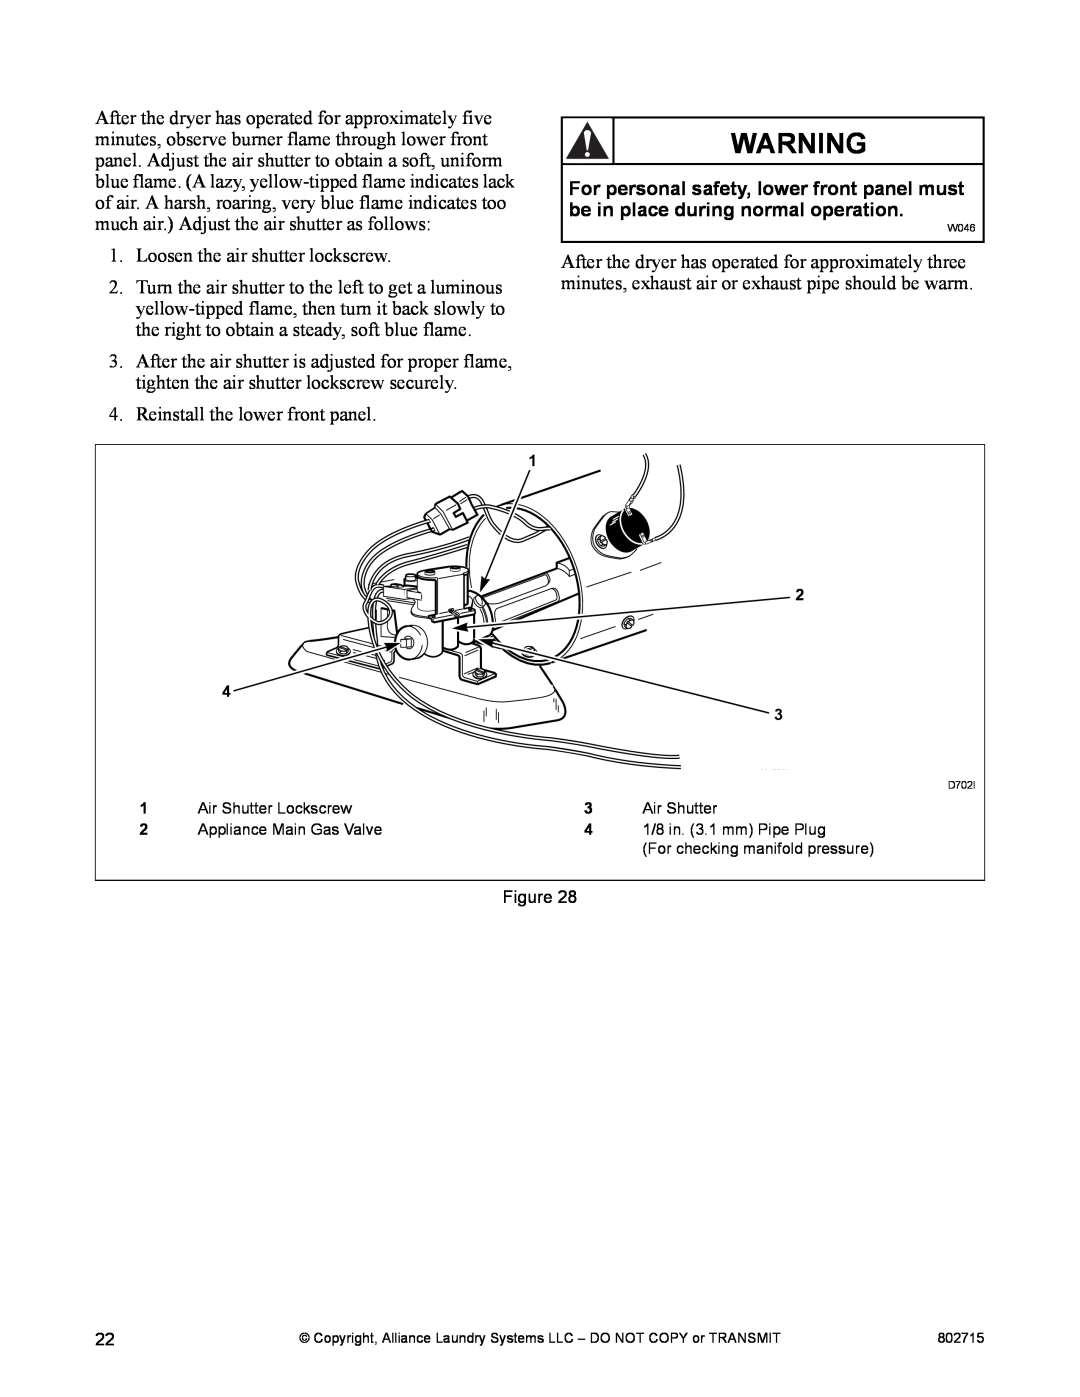 Alliance Laundry Systems Dishwasher manual Loosen the air shutter lockscrew 